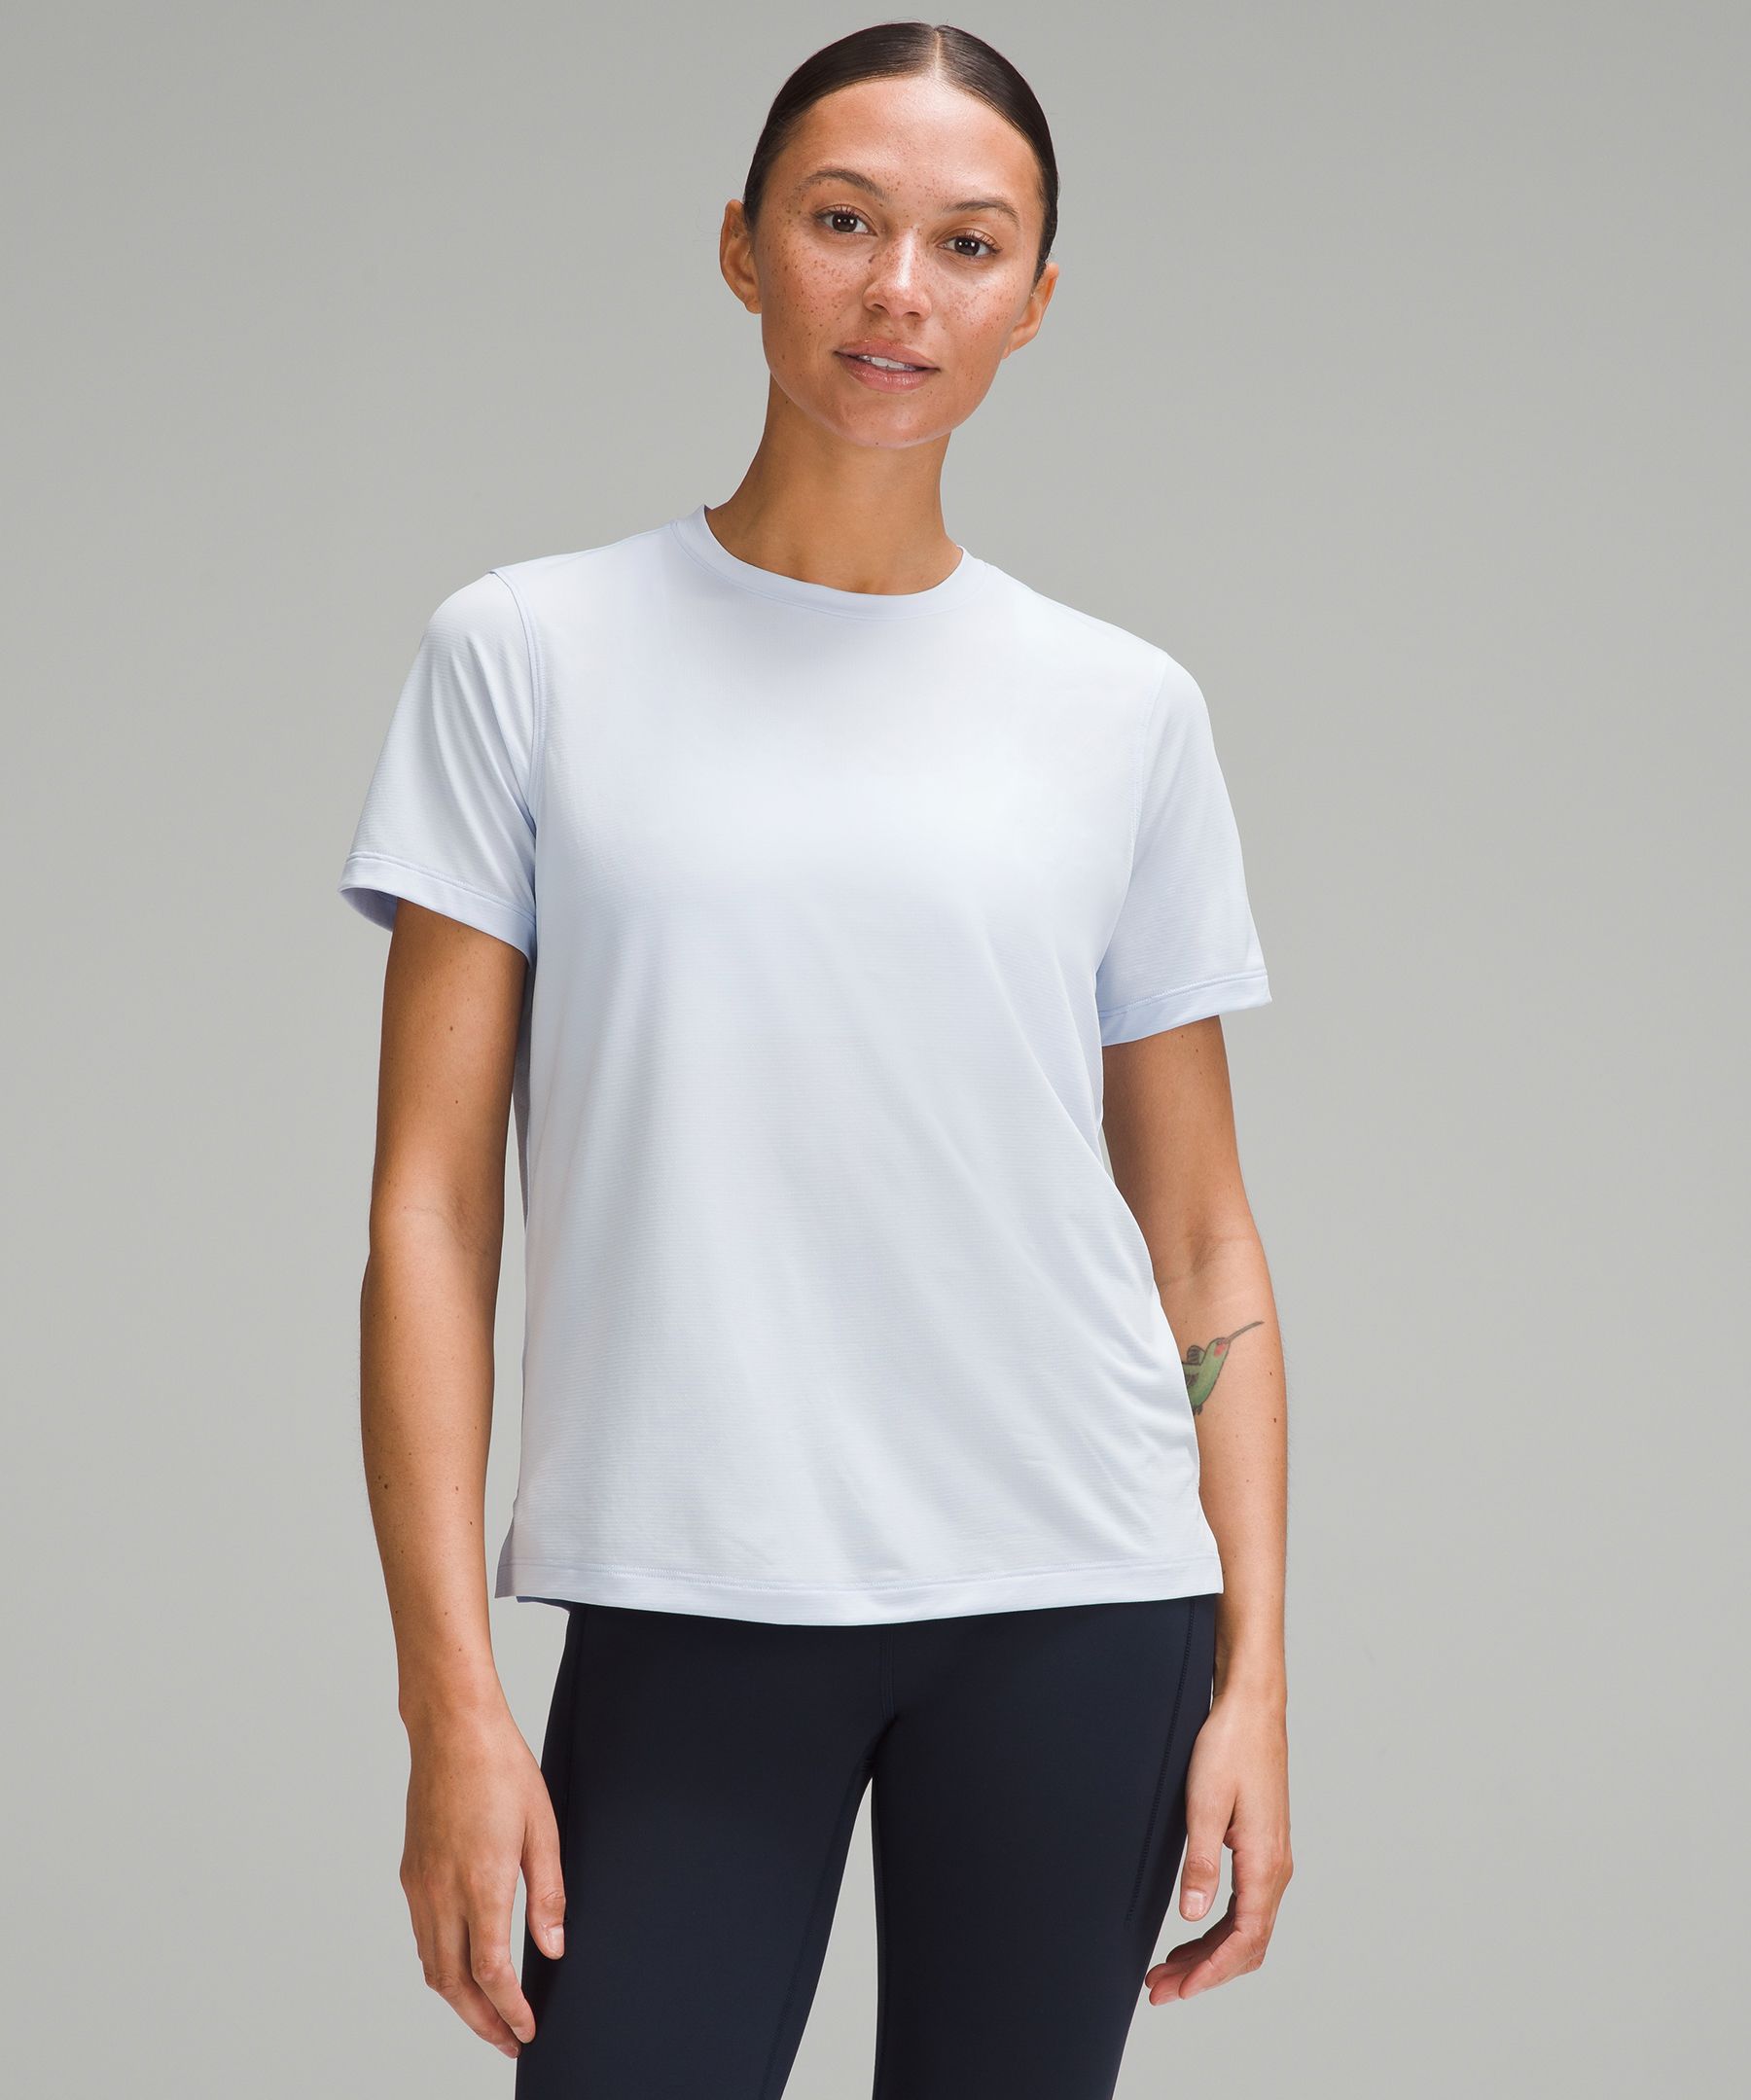 lululemon Align™ T-Shirt | Women's Short Sleeve Shirts & Tee's | lululemon